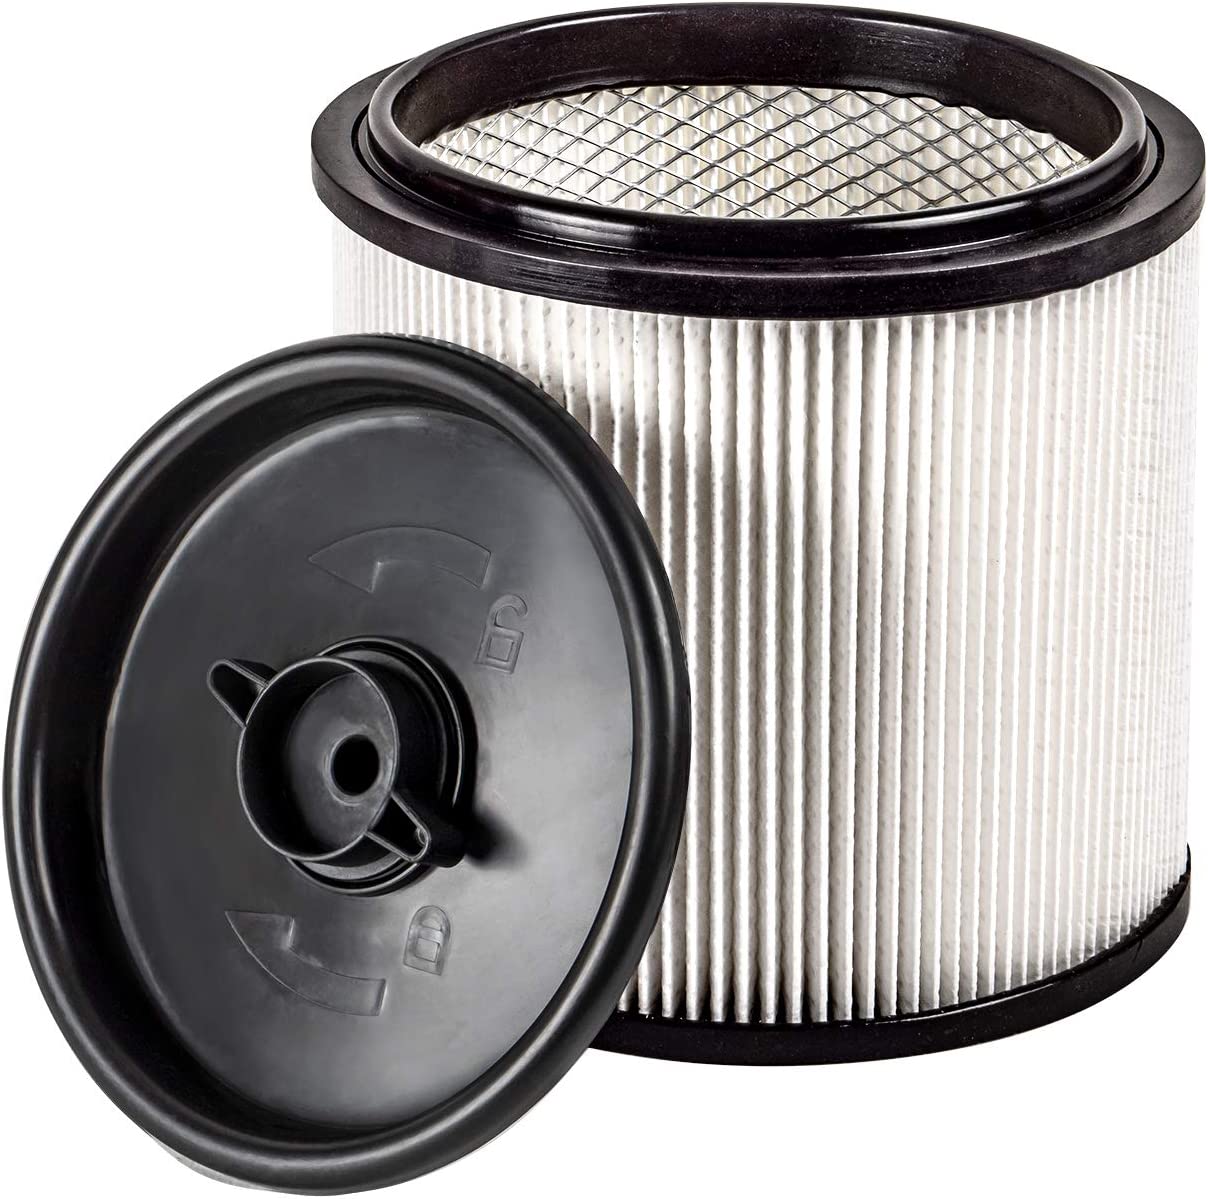 Vacmaster Hepa Material Fine Dust Cartridge Filter & Retainer $7